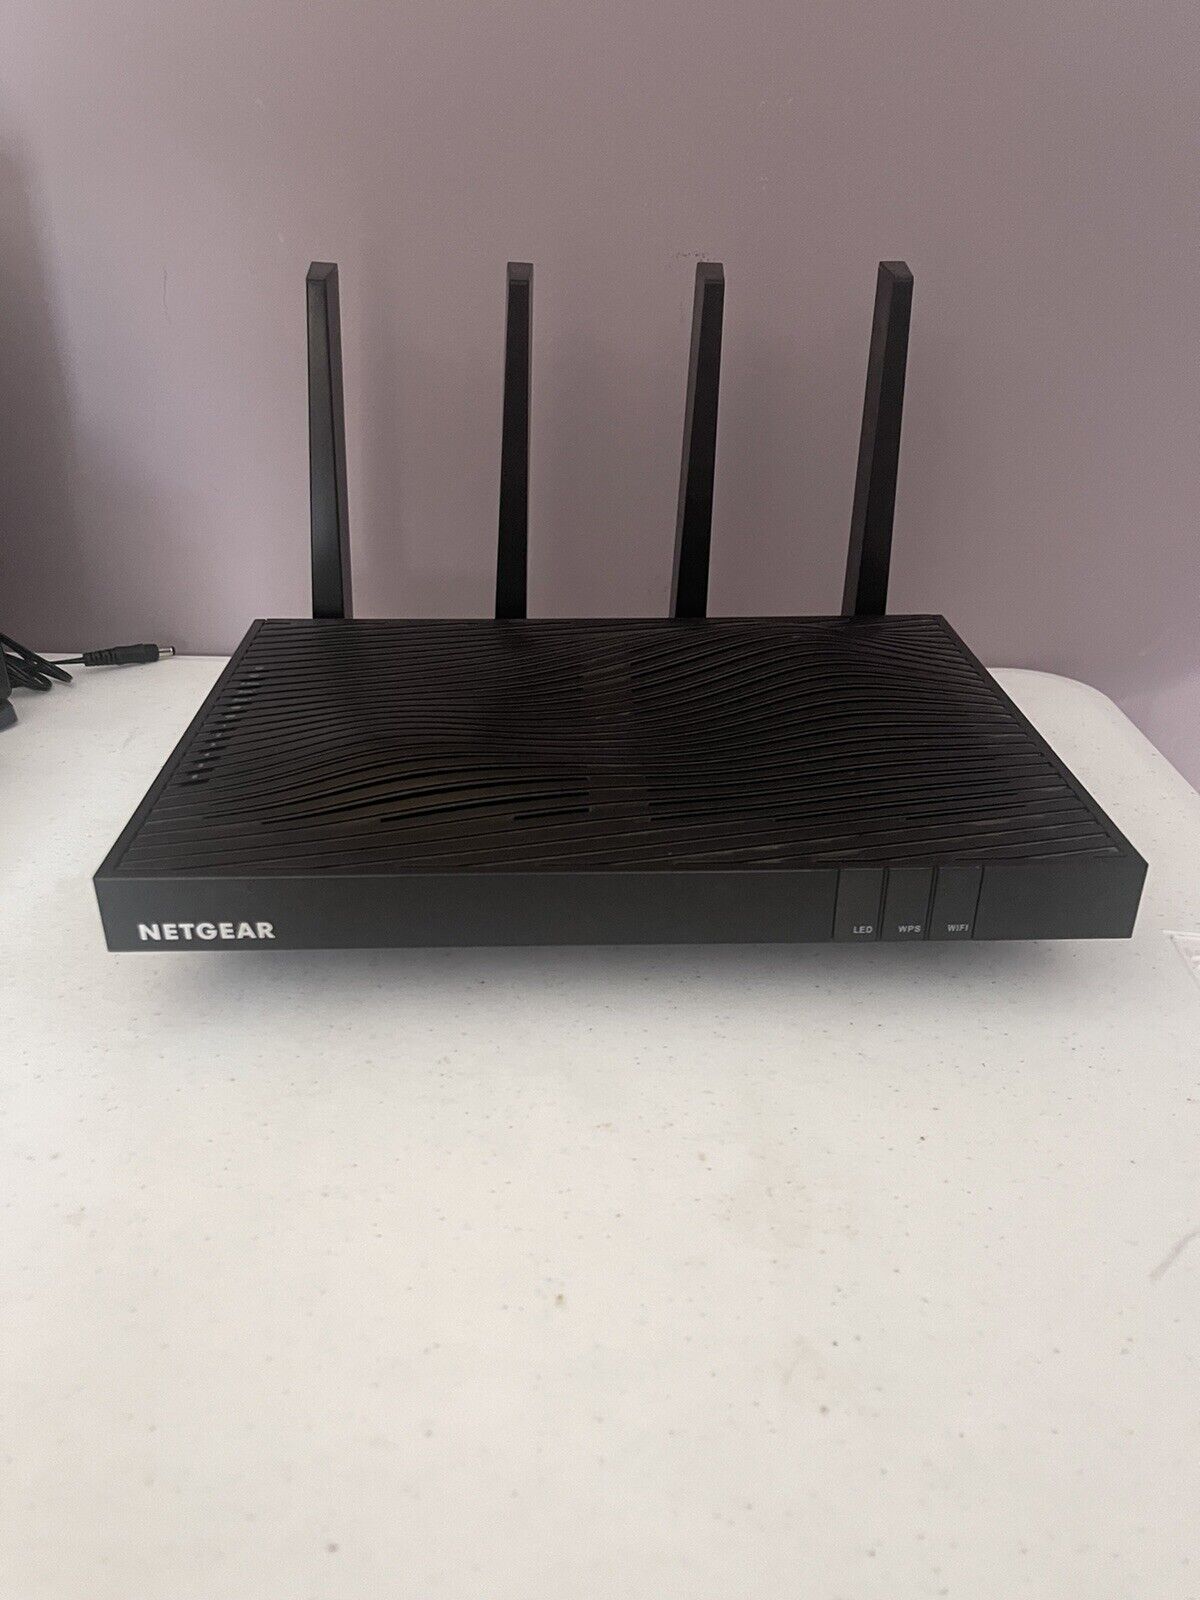 NETGEAR Nighthawk X8 AC5300 WiFi Router